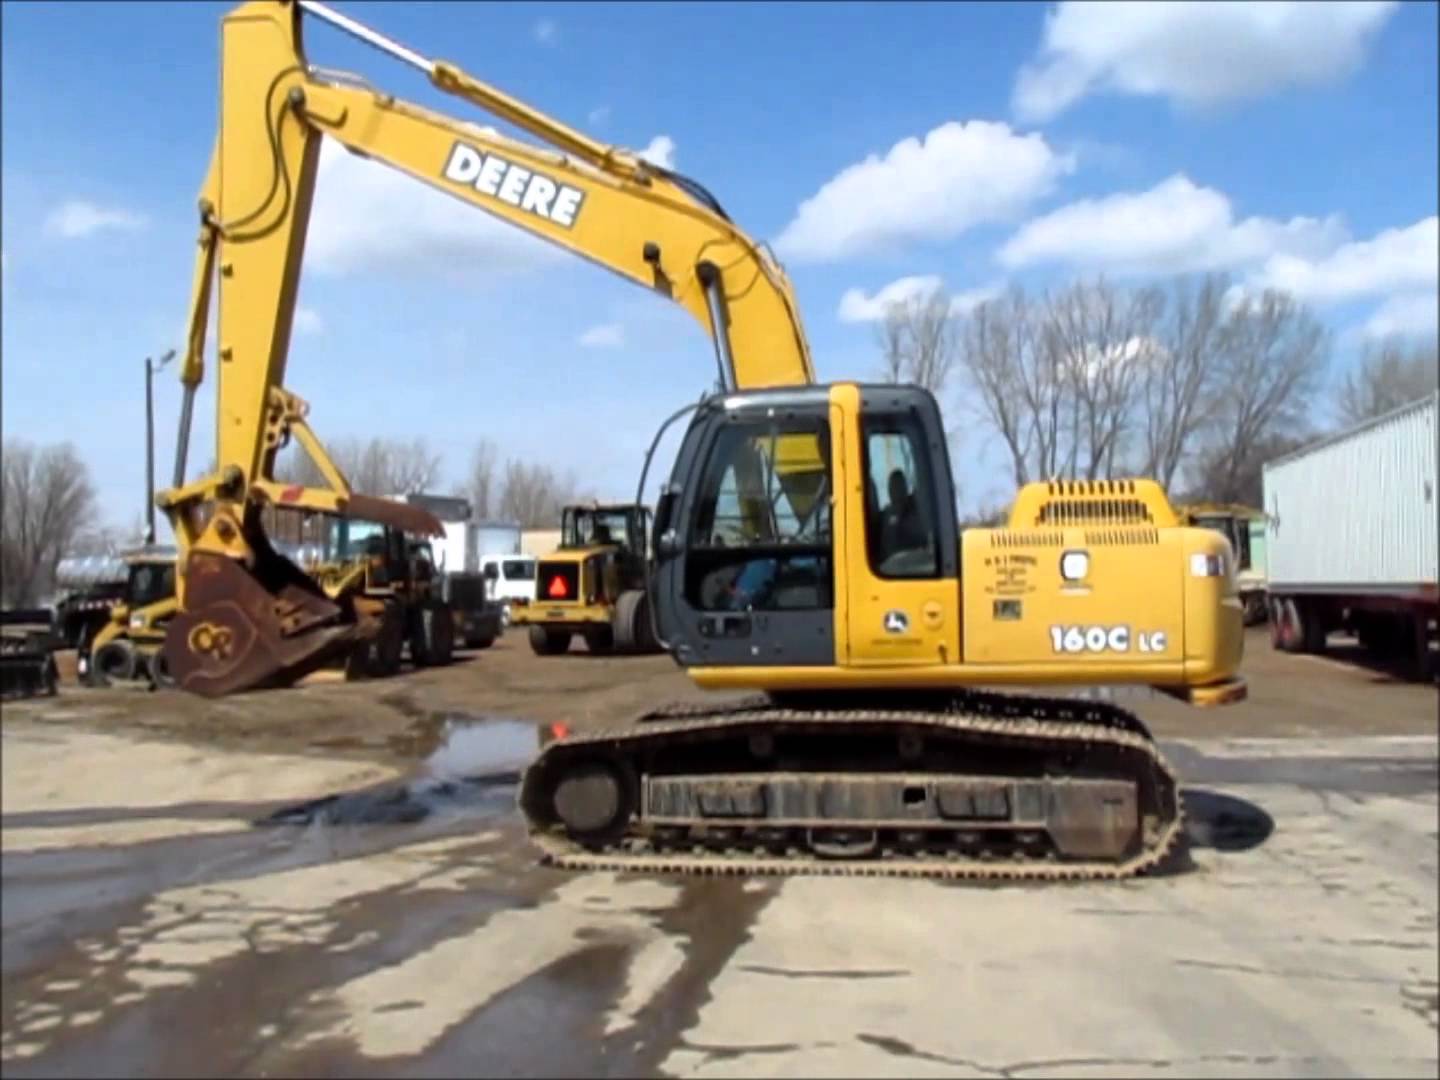 2005 John Deere 160C LC excavator for sale | sold at ...